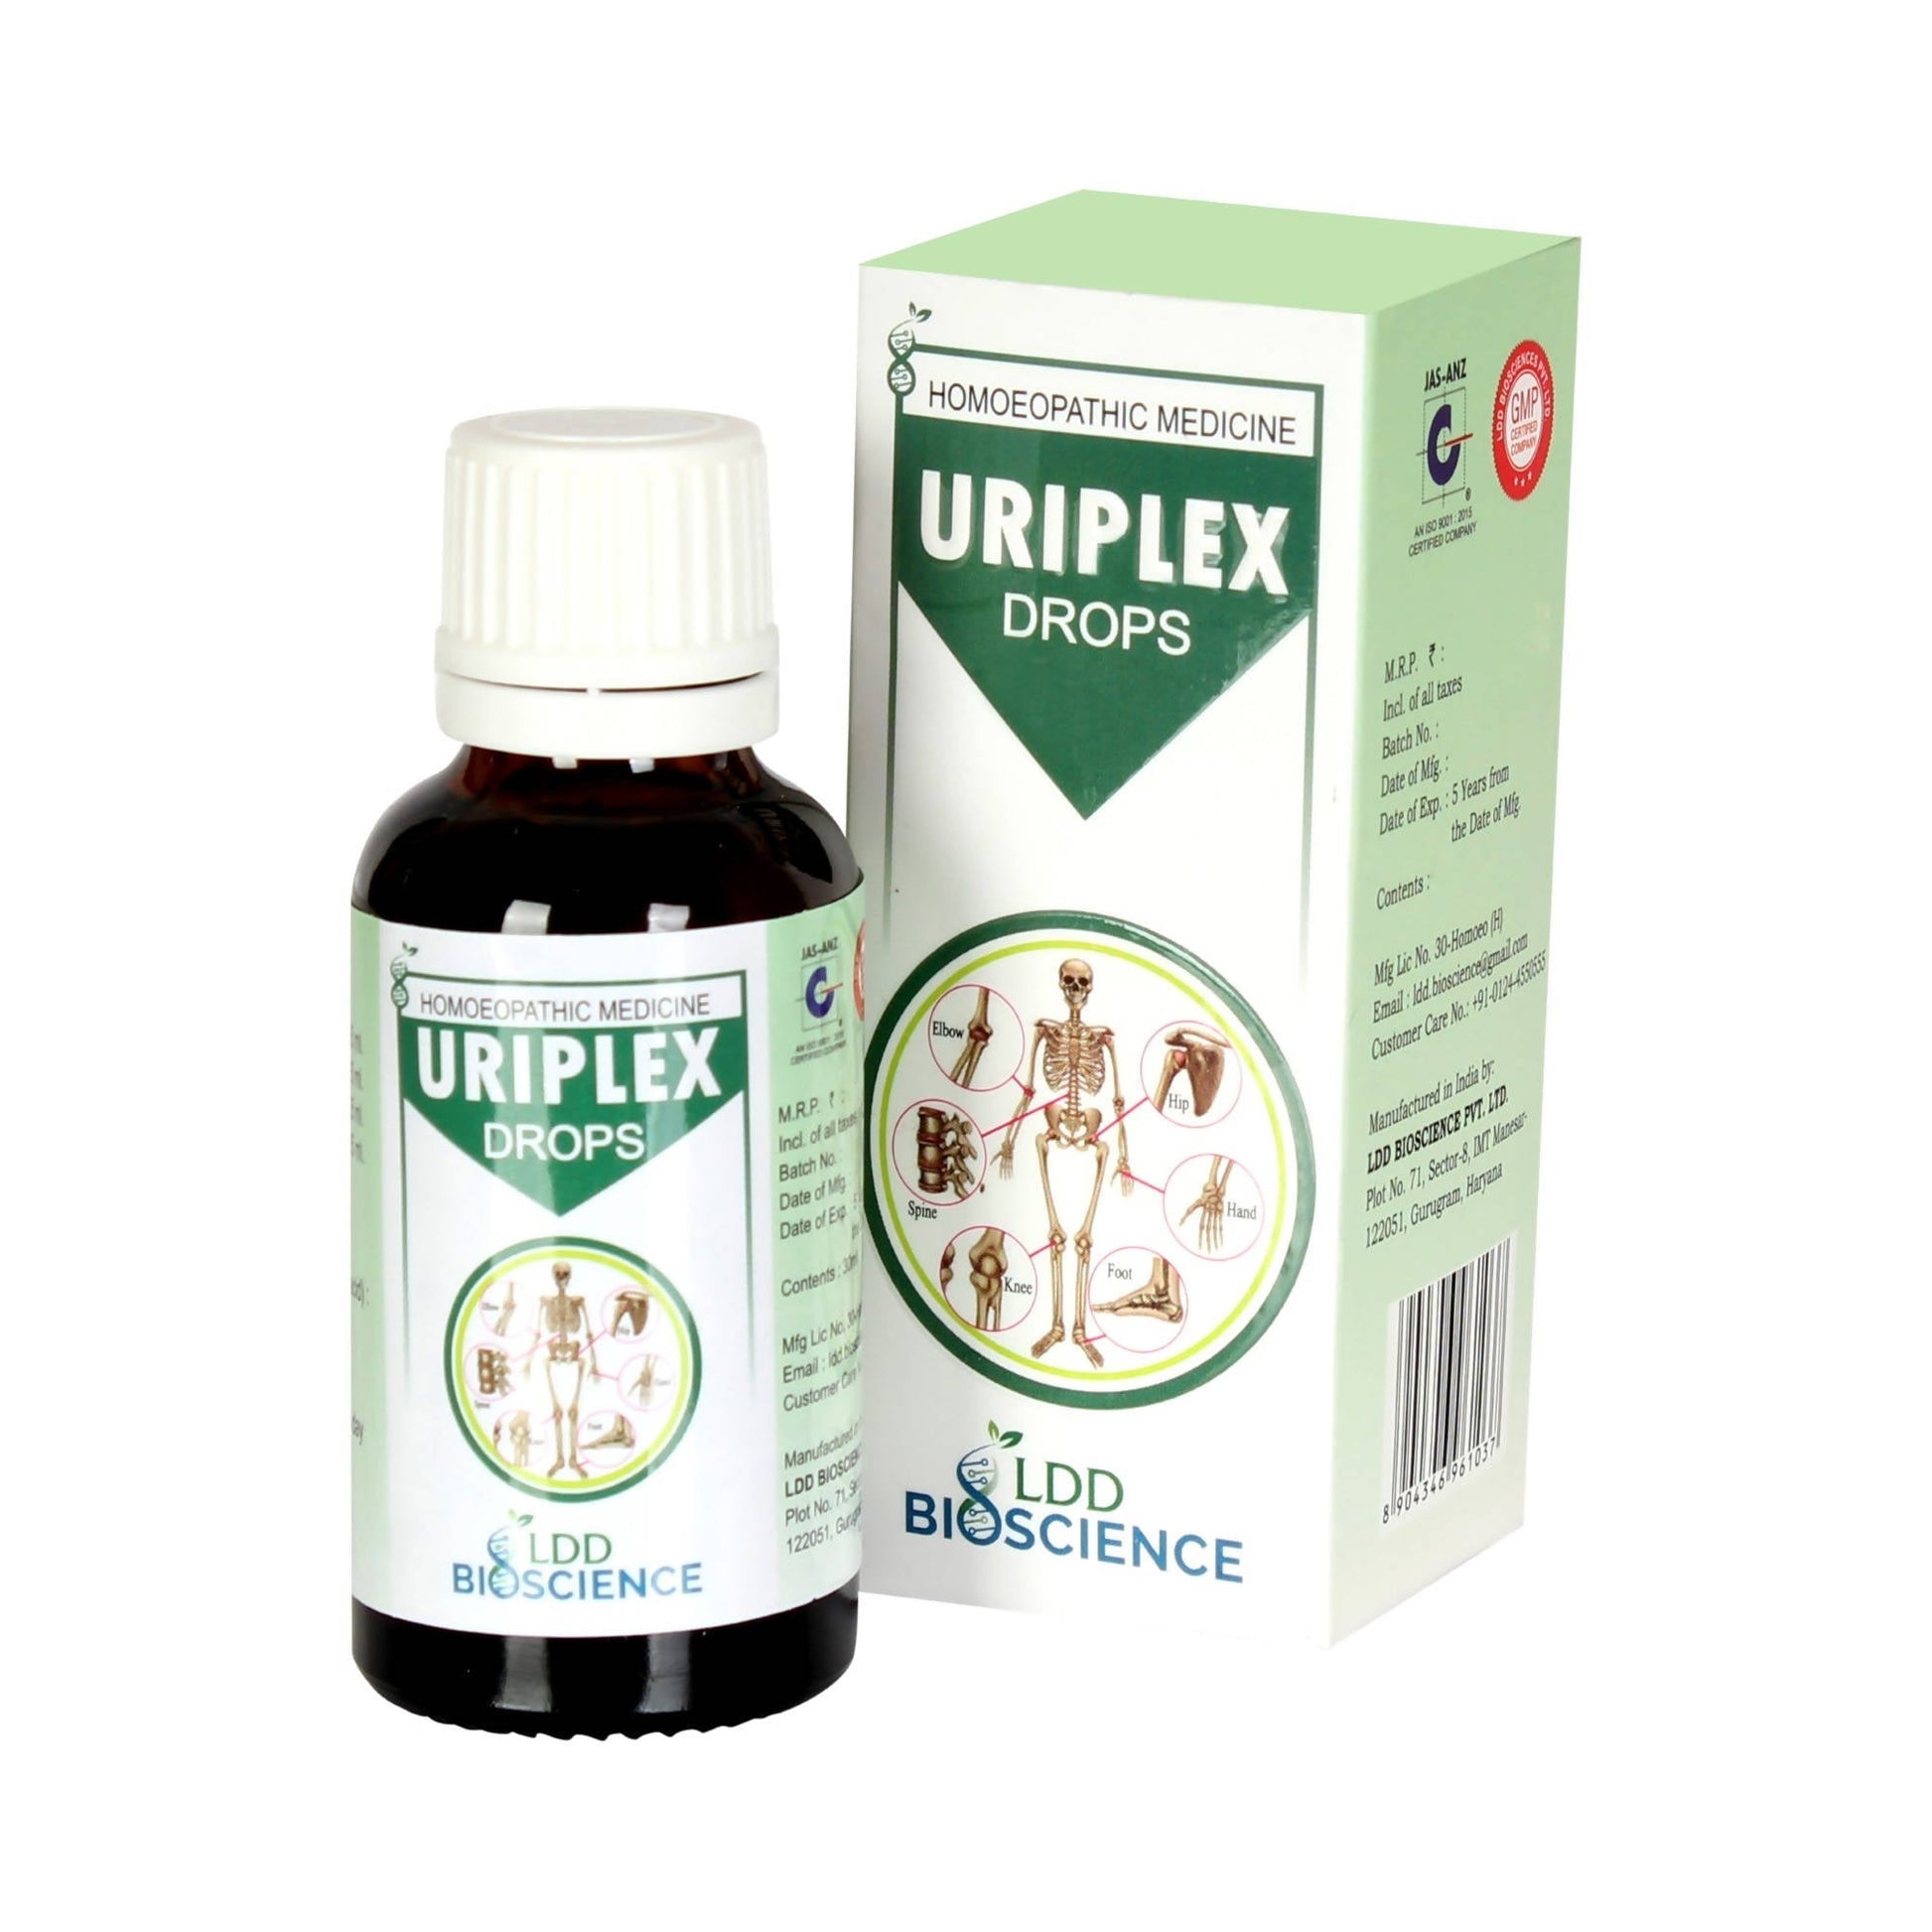 LDD Bioscience Homeopathy Uriplex Drops